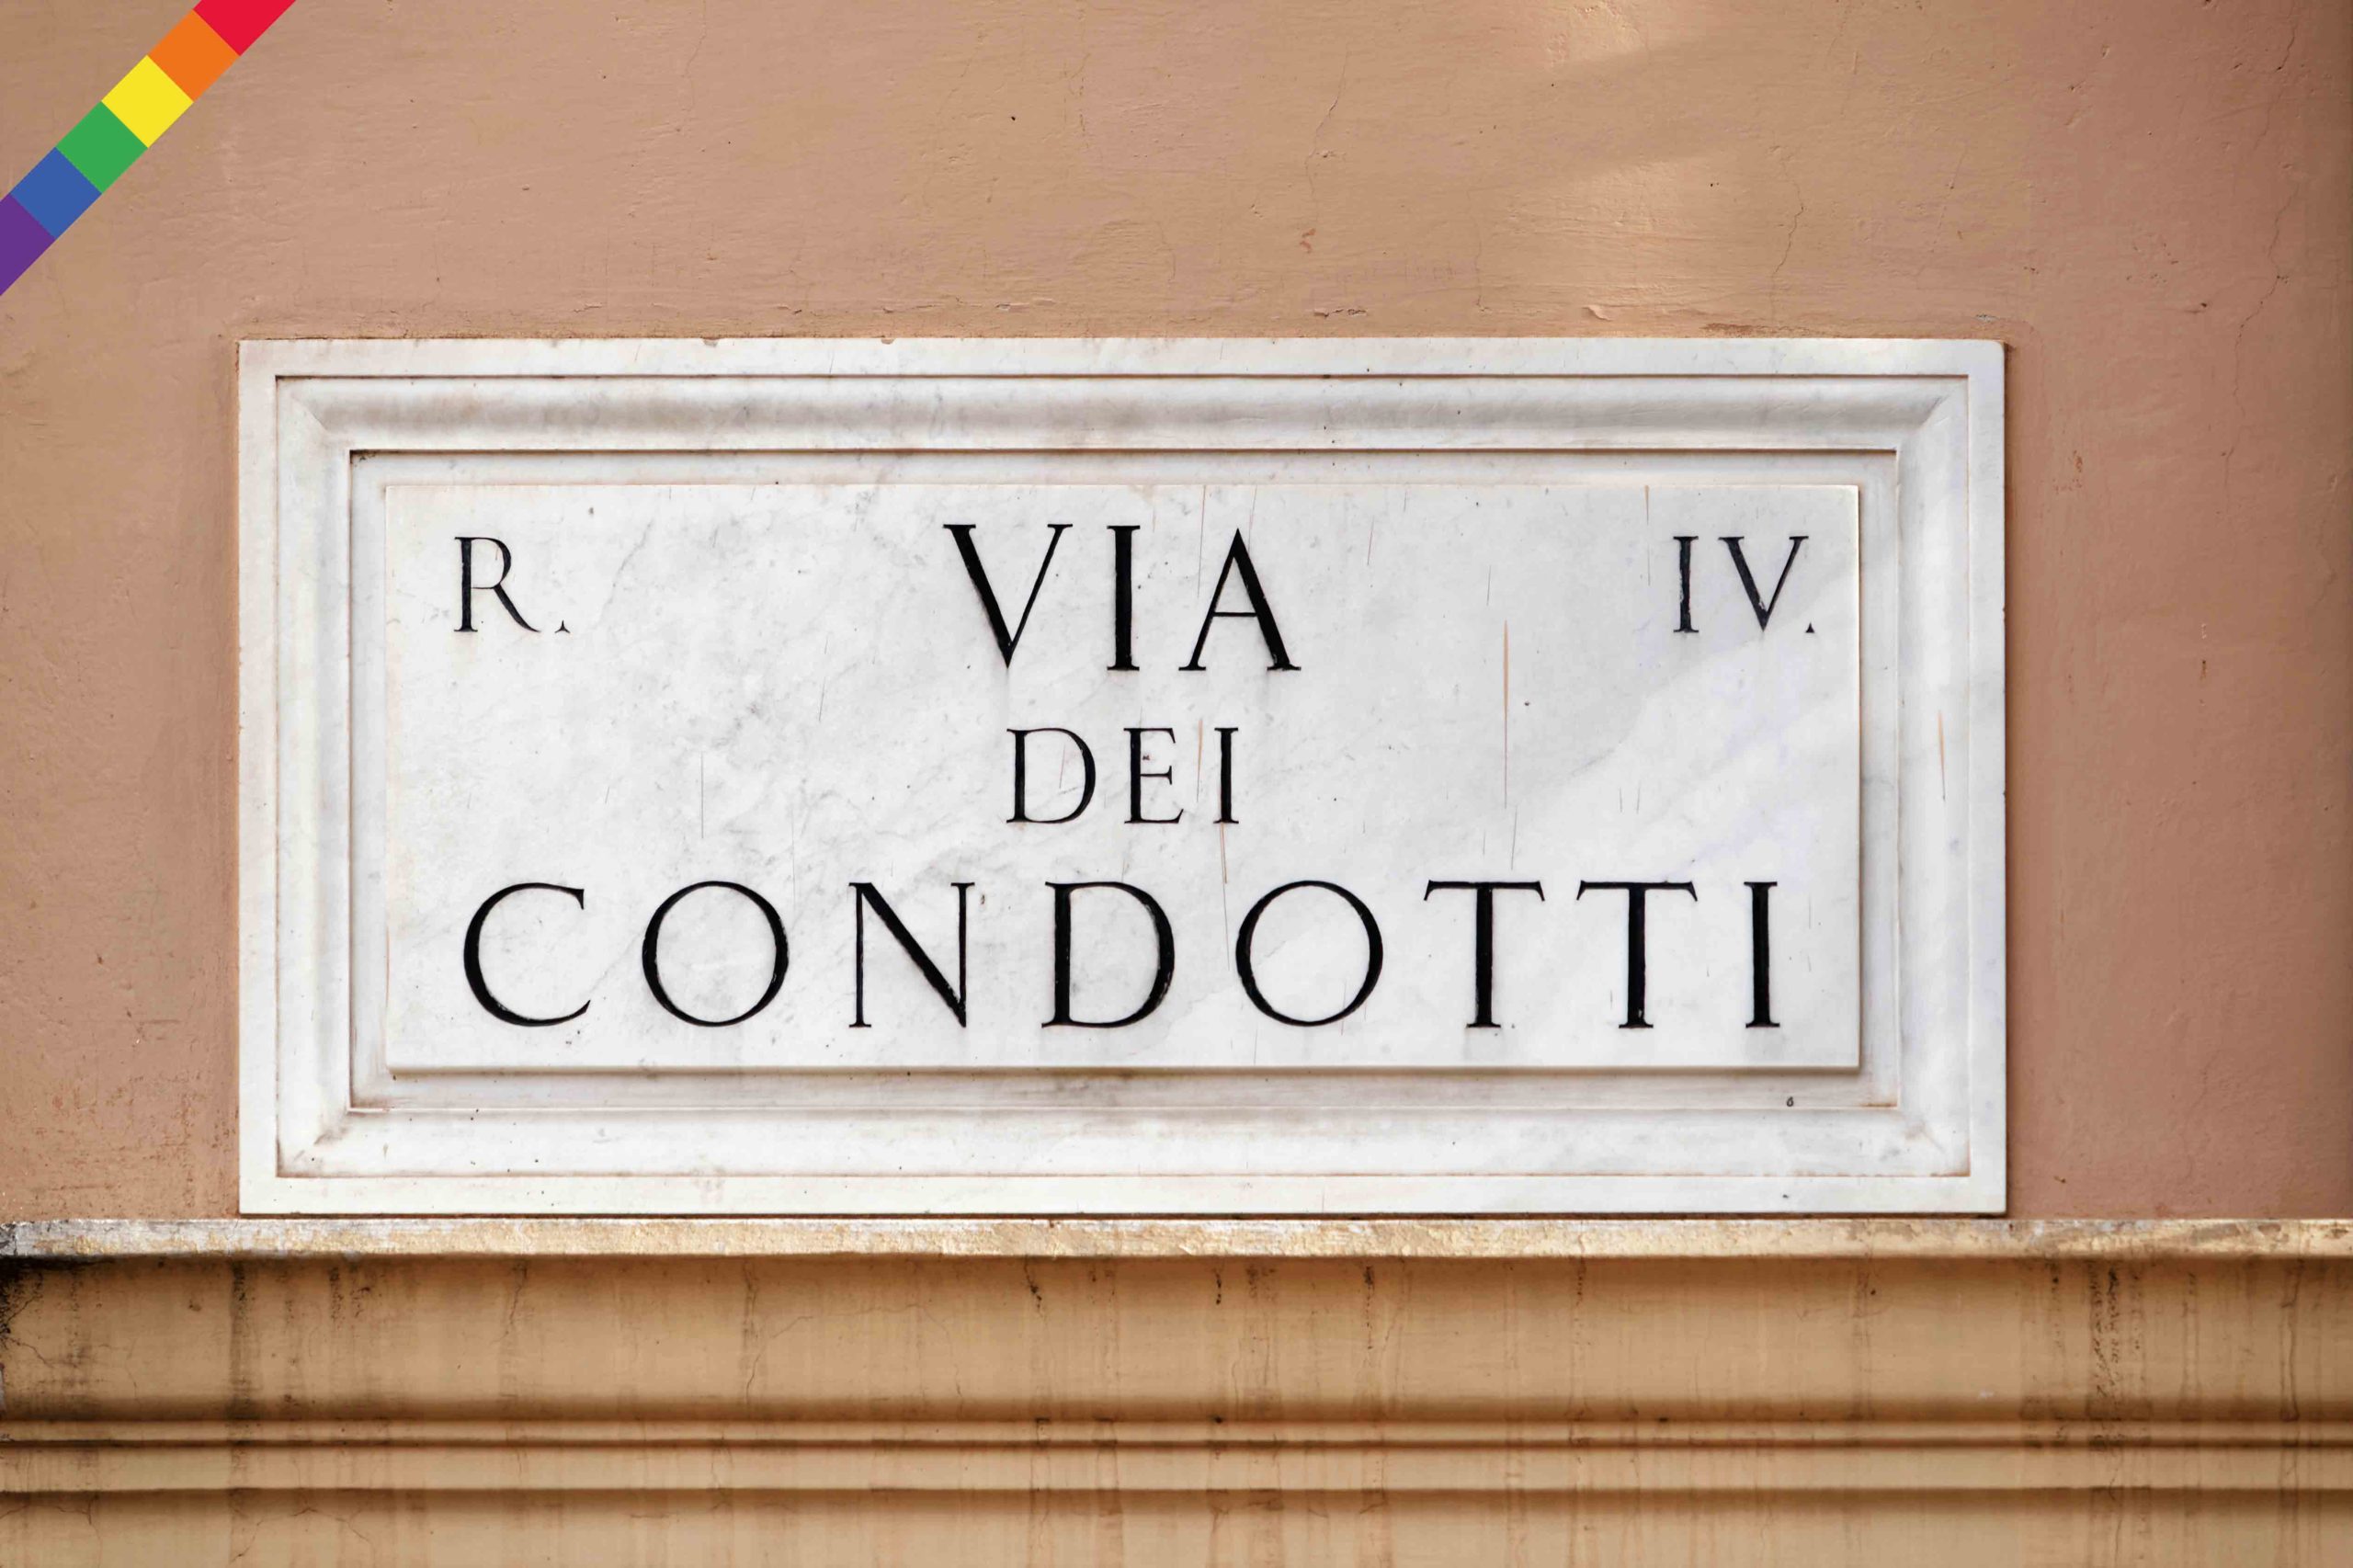 Via dei Condotti street sign on the wall in Rome, Italy